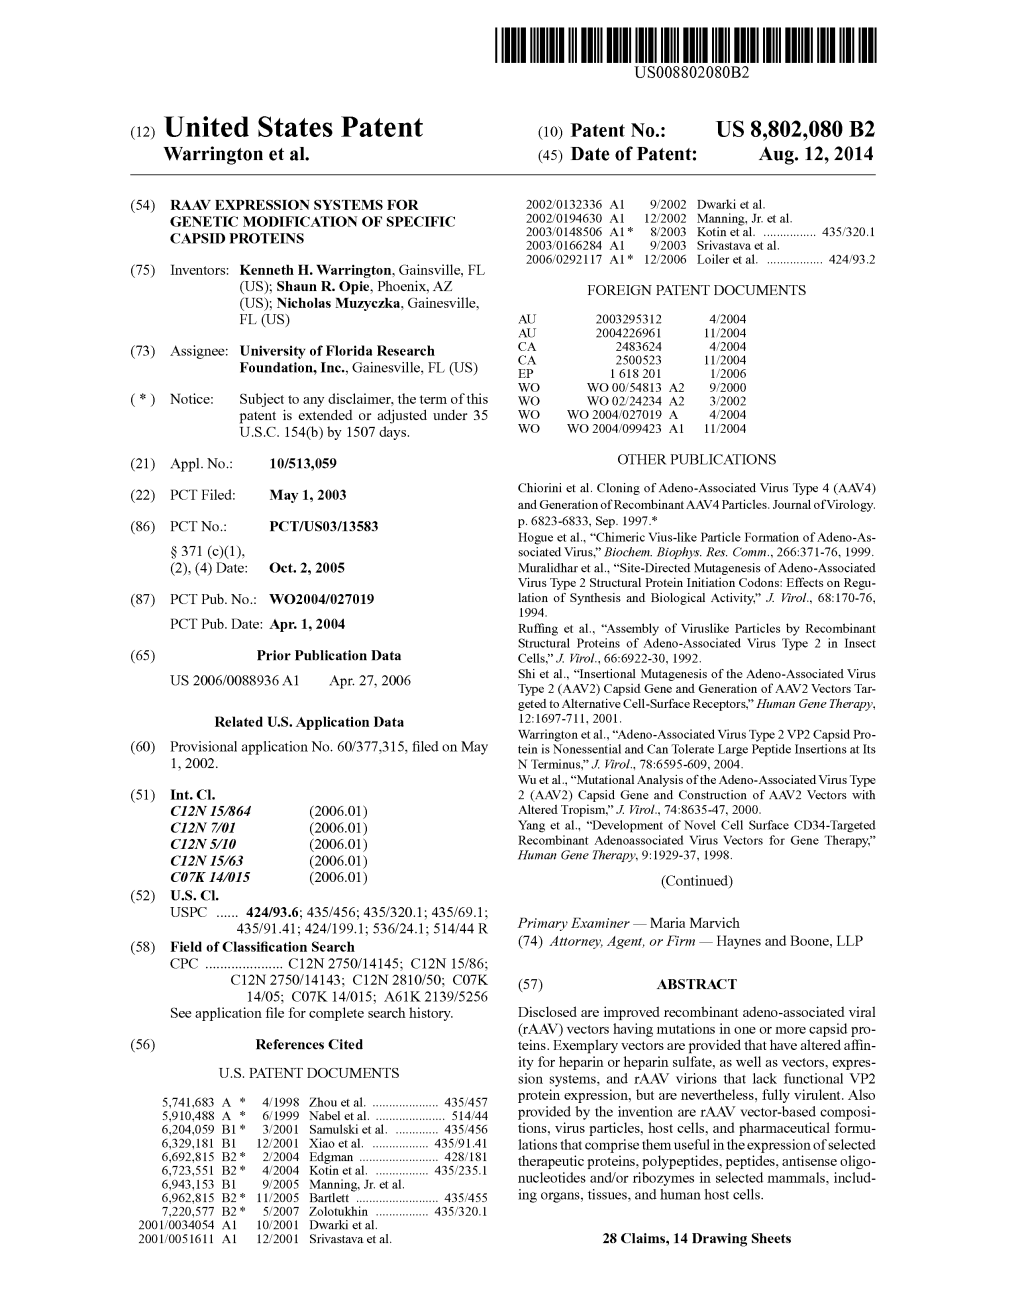 United States Patent 435/91.41:424/1991:536